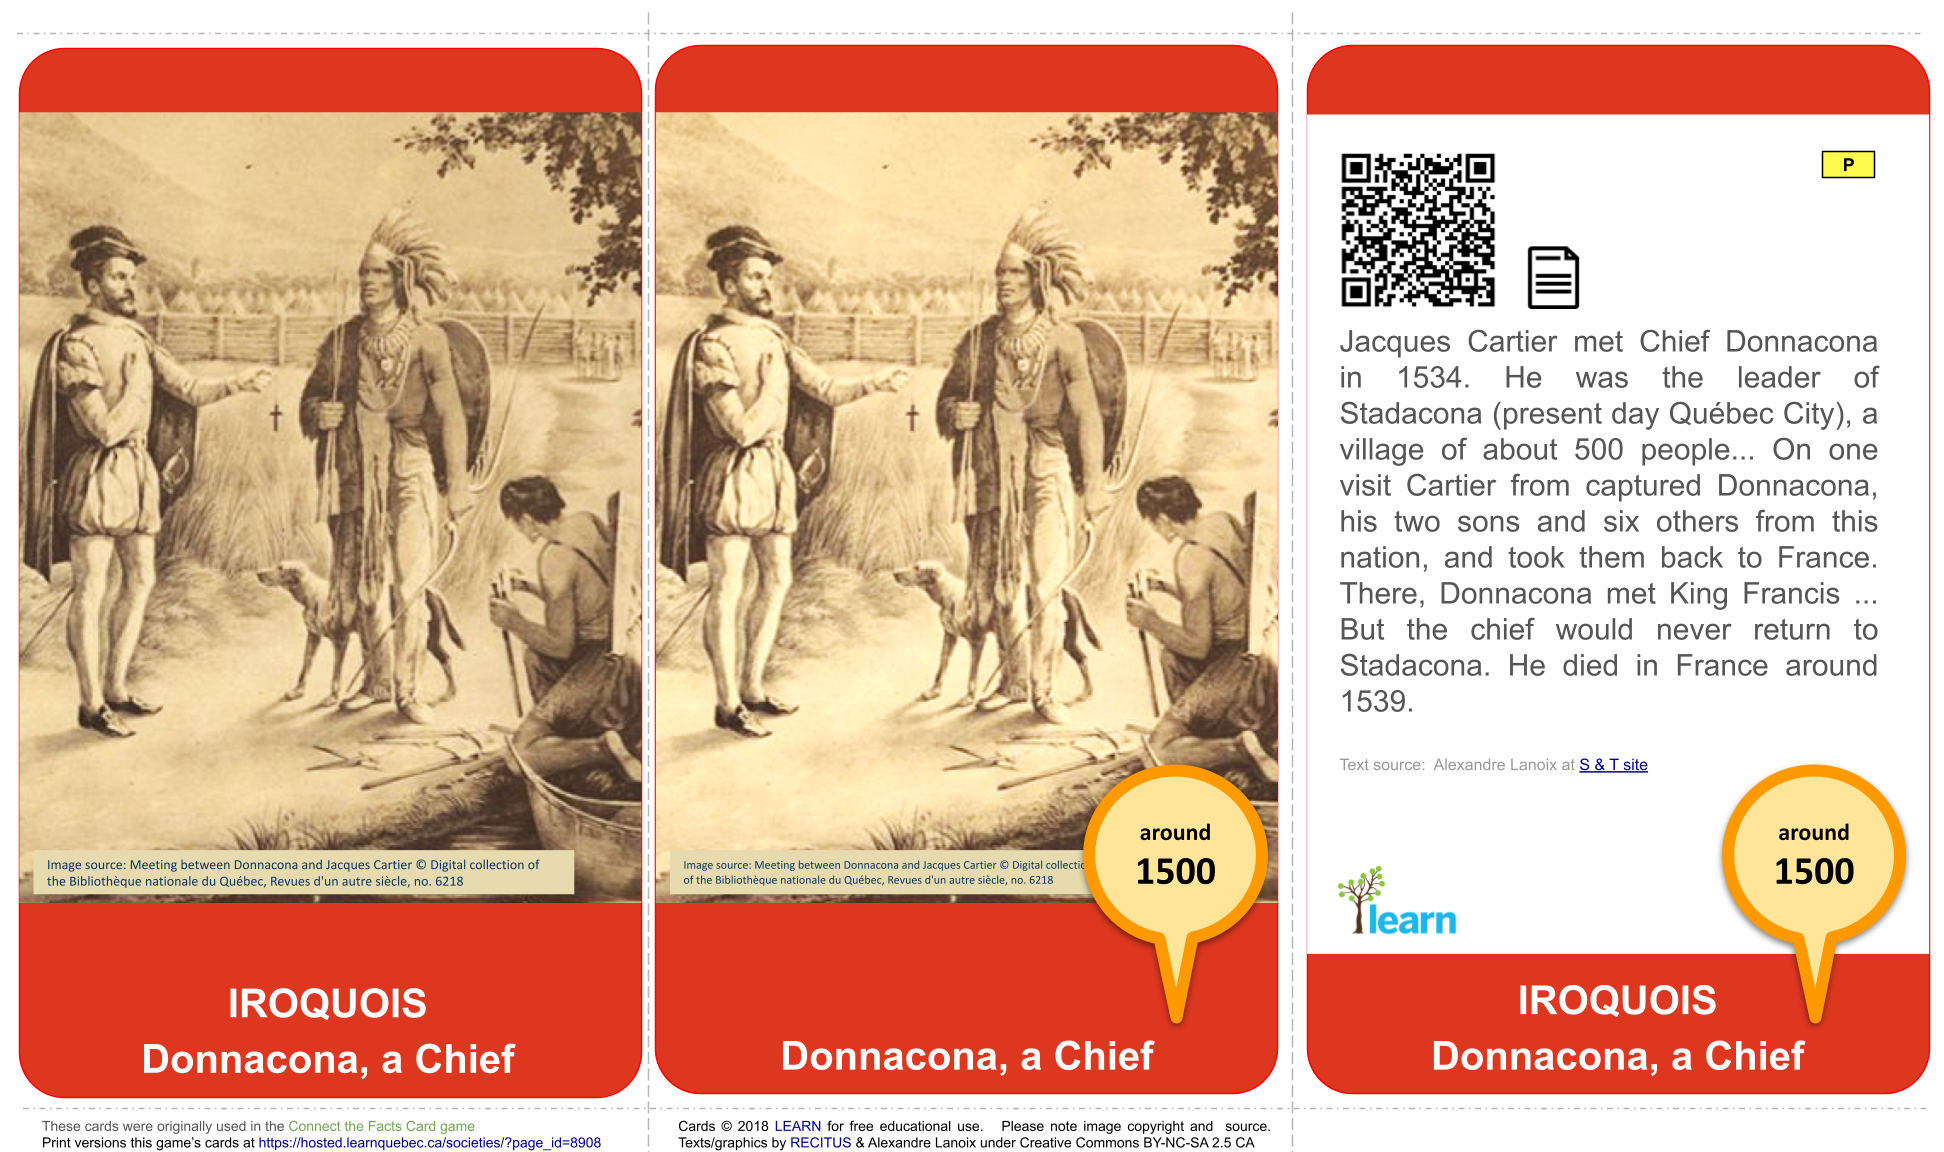 Iroquois: Donnacona a chief